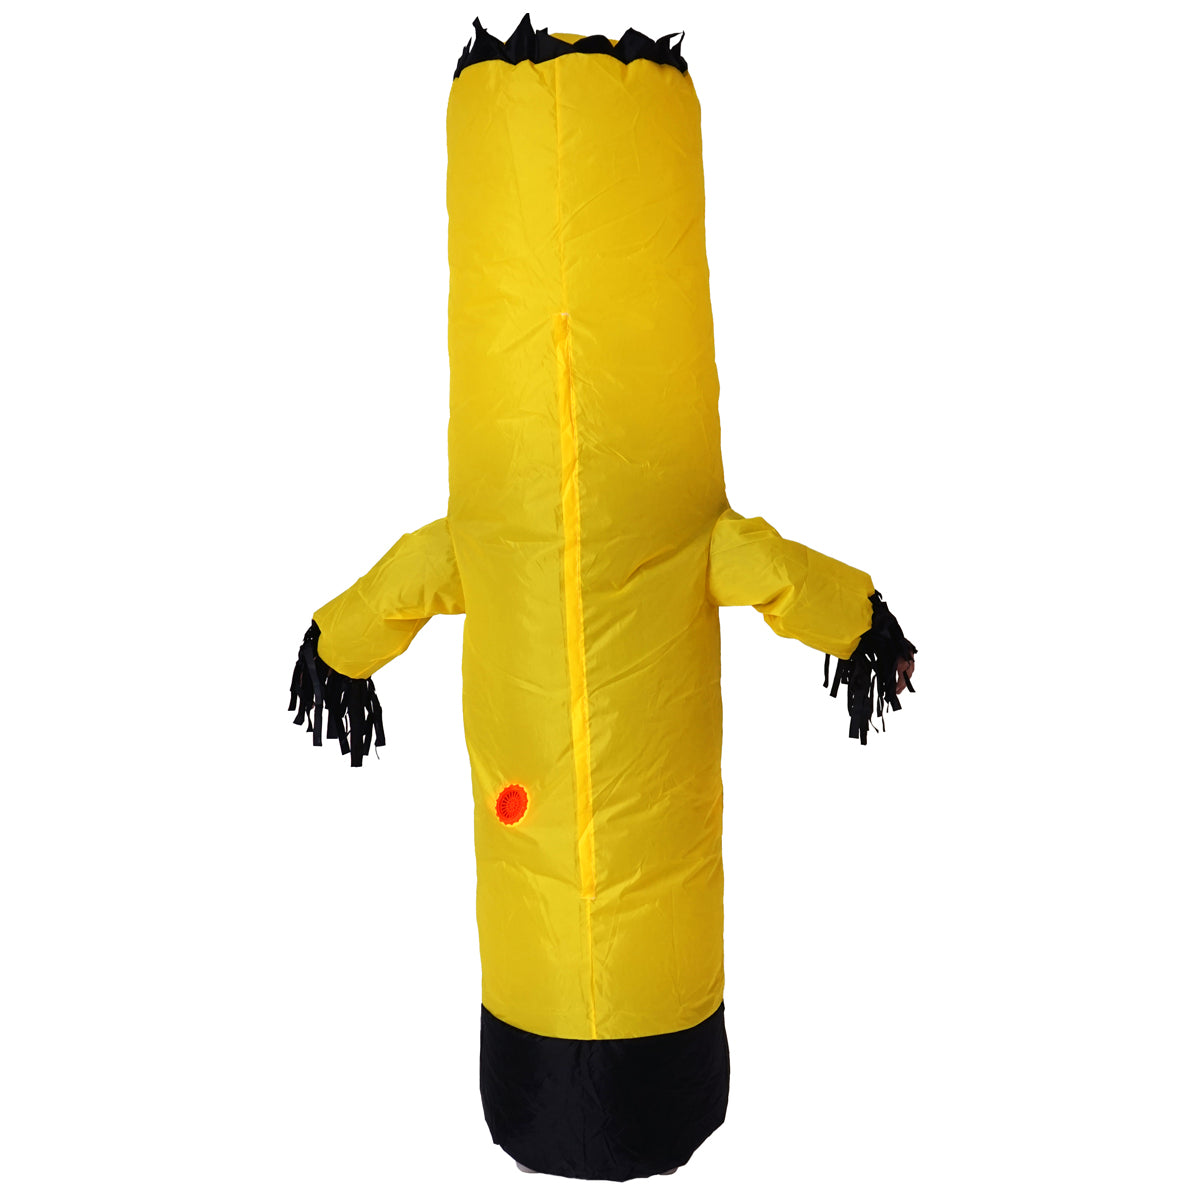 Inflatable Tubeman Costume